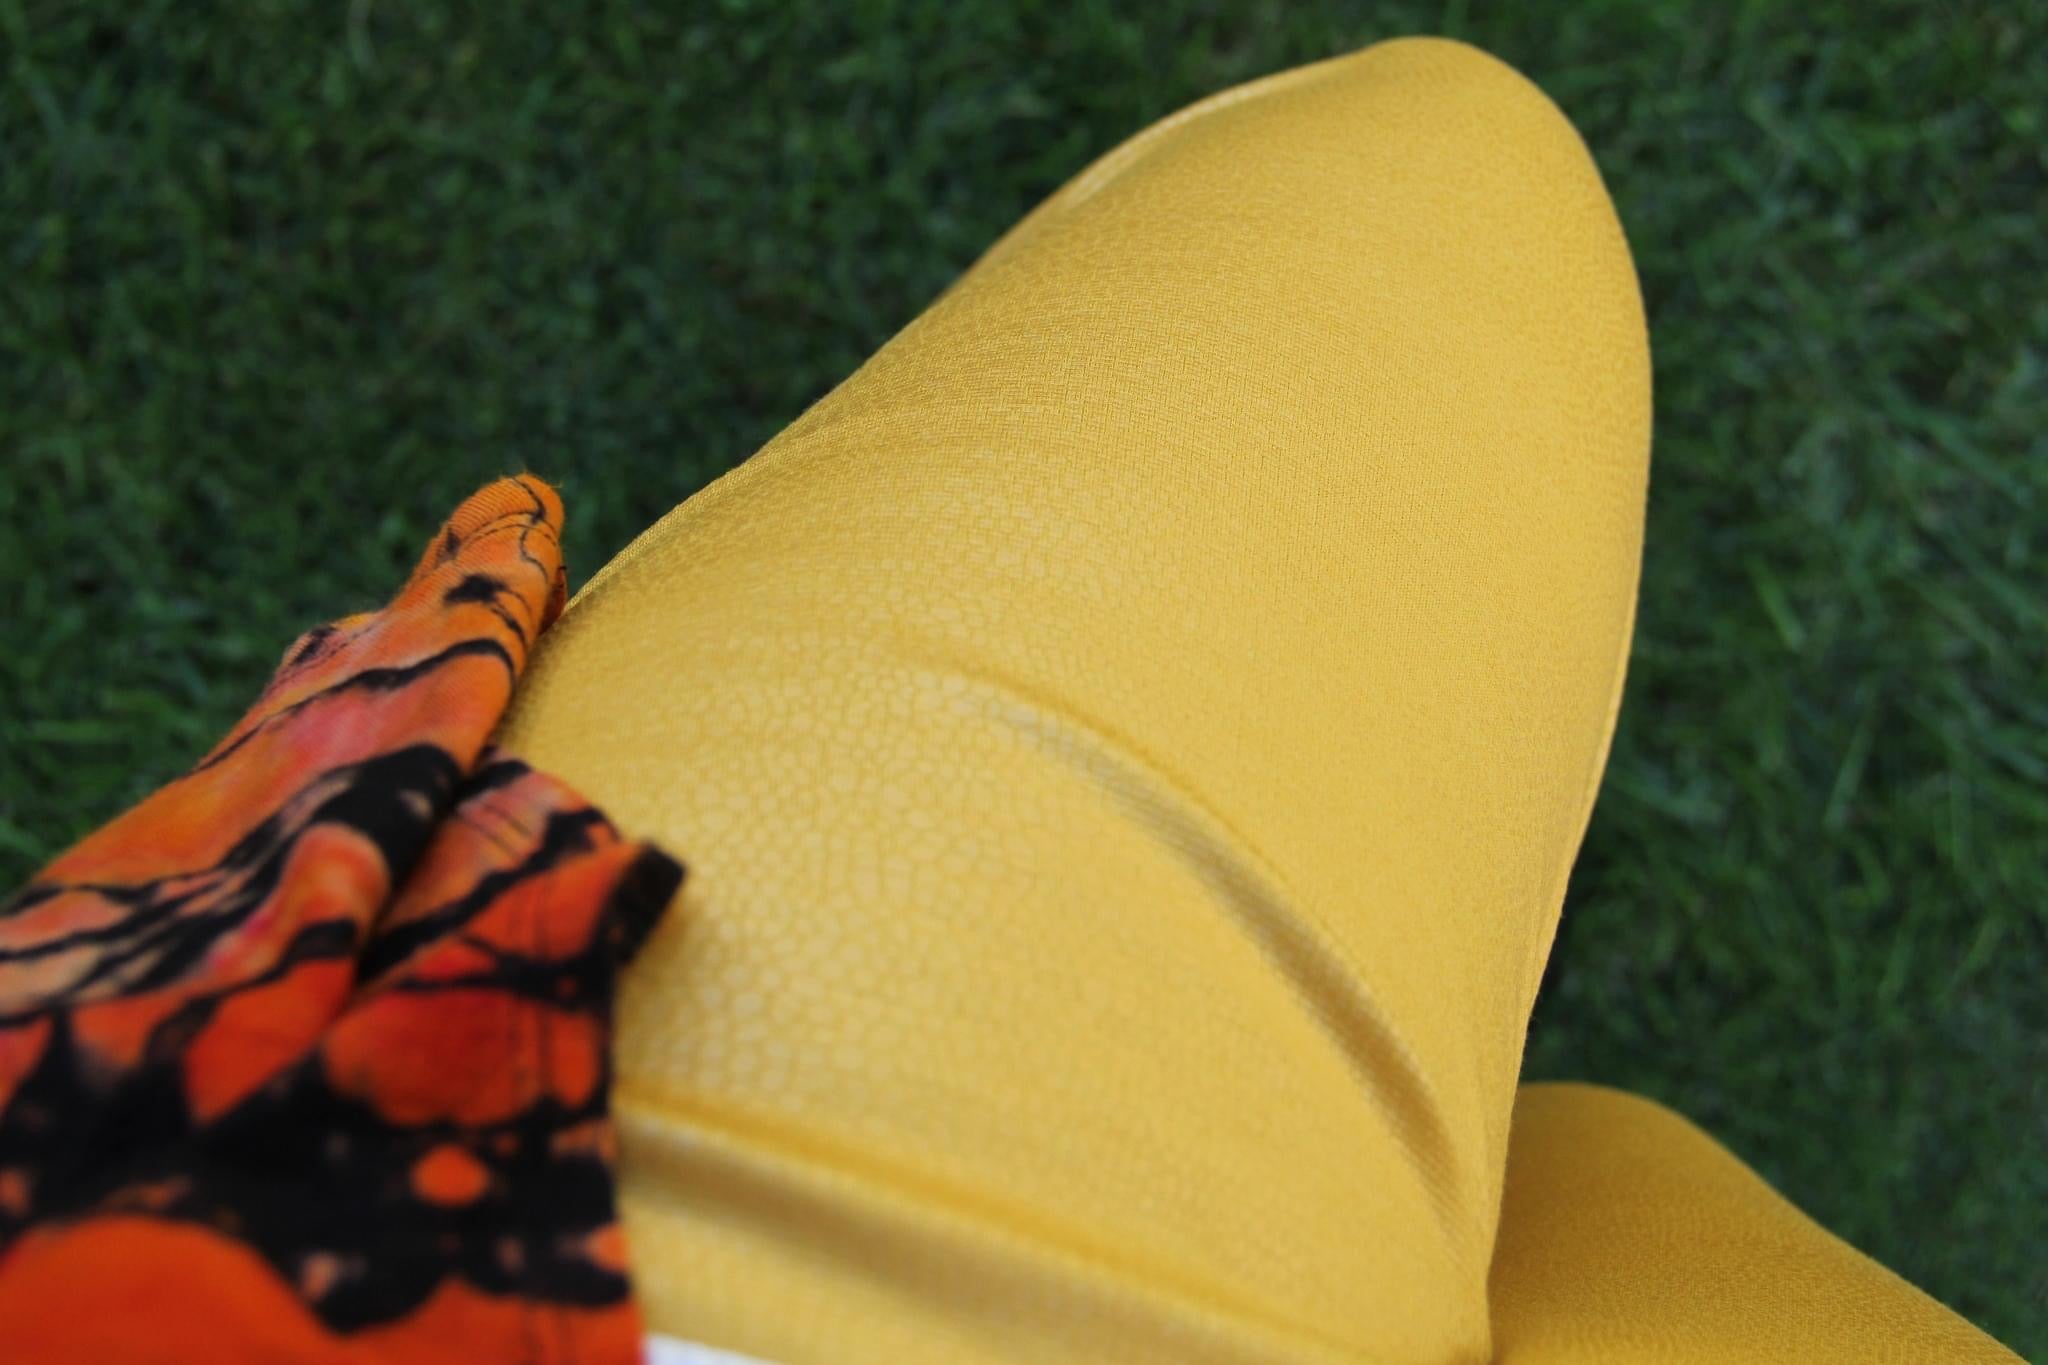 Last Cuts! Yellow Dragonscale, Ponte Print, Double Knit - Boho Fabrics